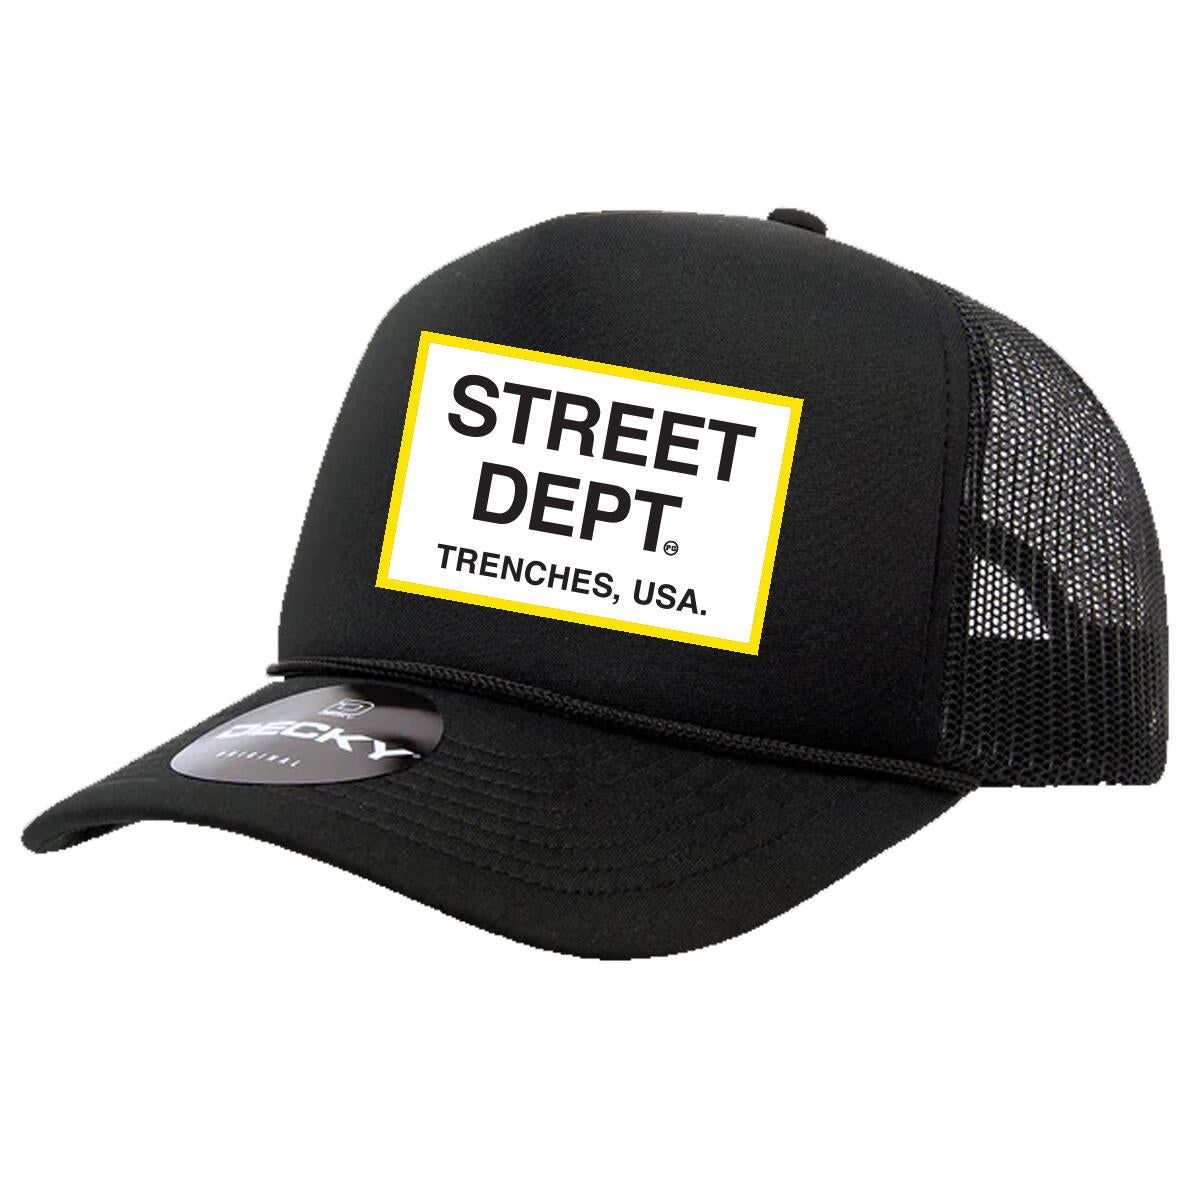 Street Dept Trucker Hat - Black with Yellow